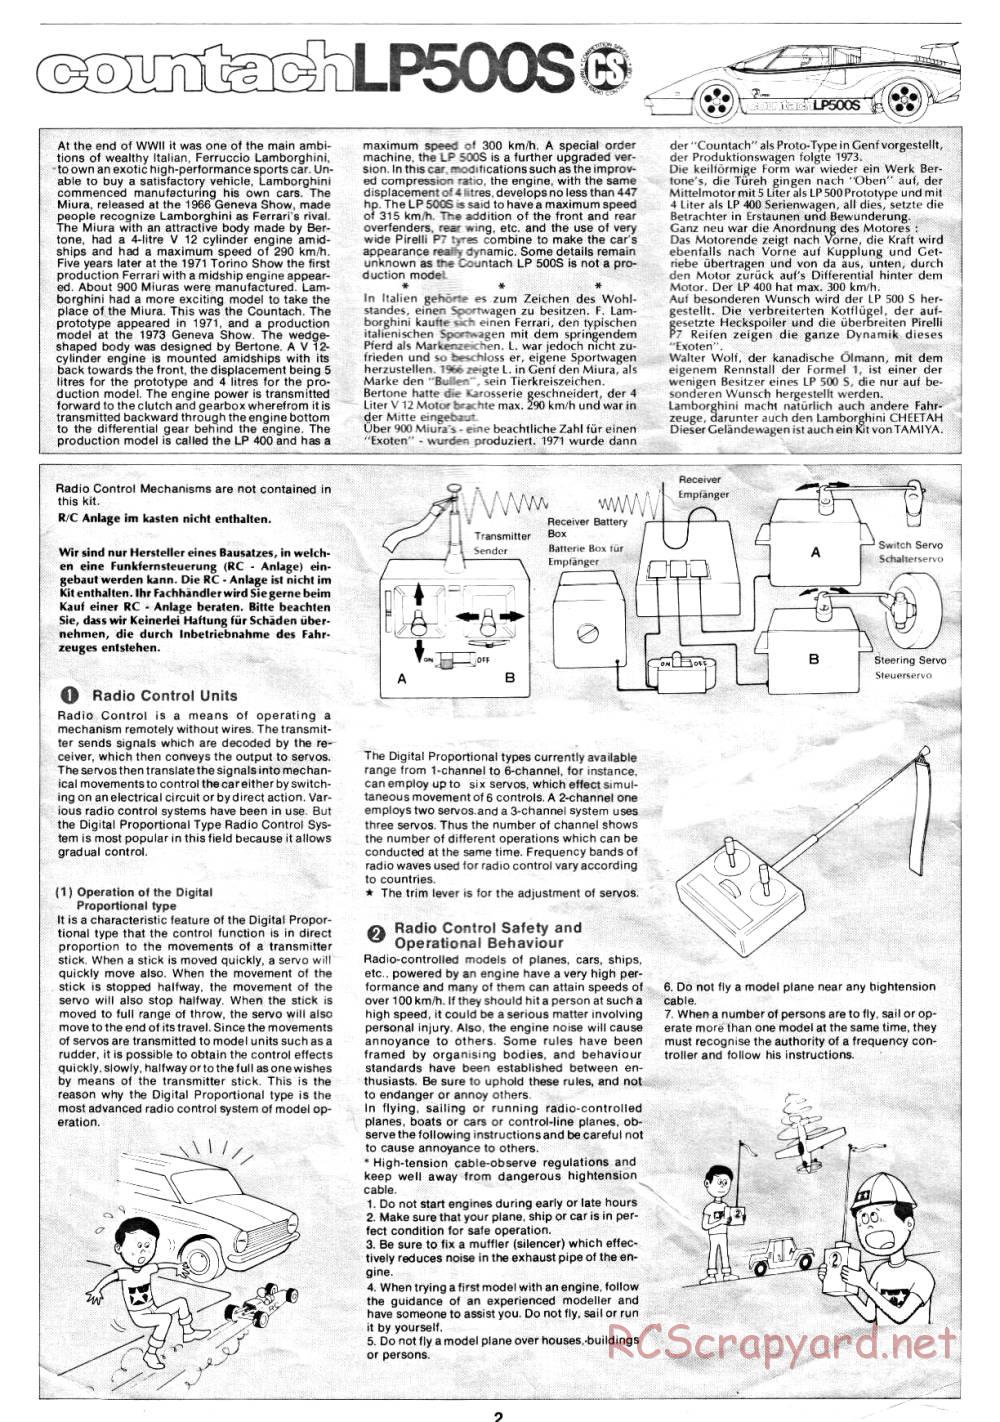 Tamiya - Lmbrghni Countach LP500S (CS) - 58008 - Manual - Page 2